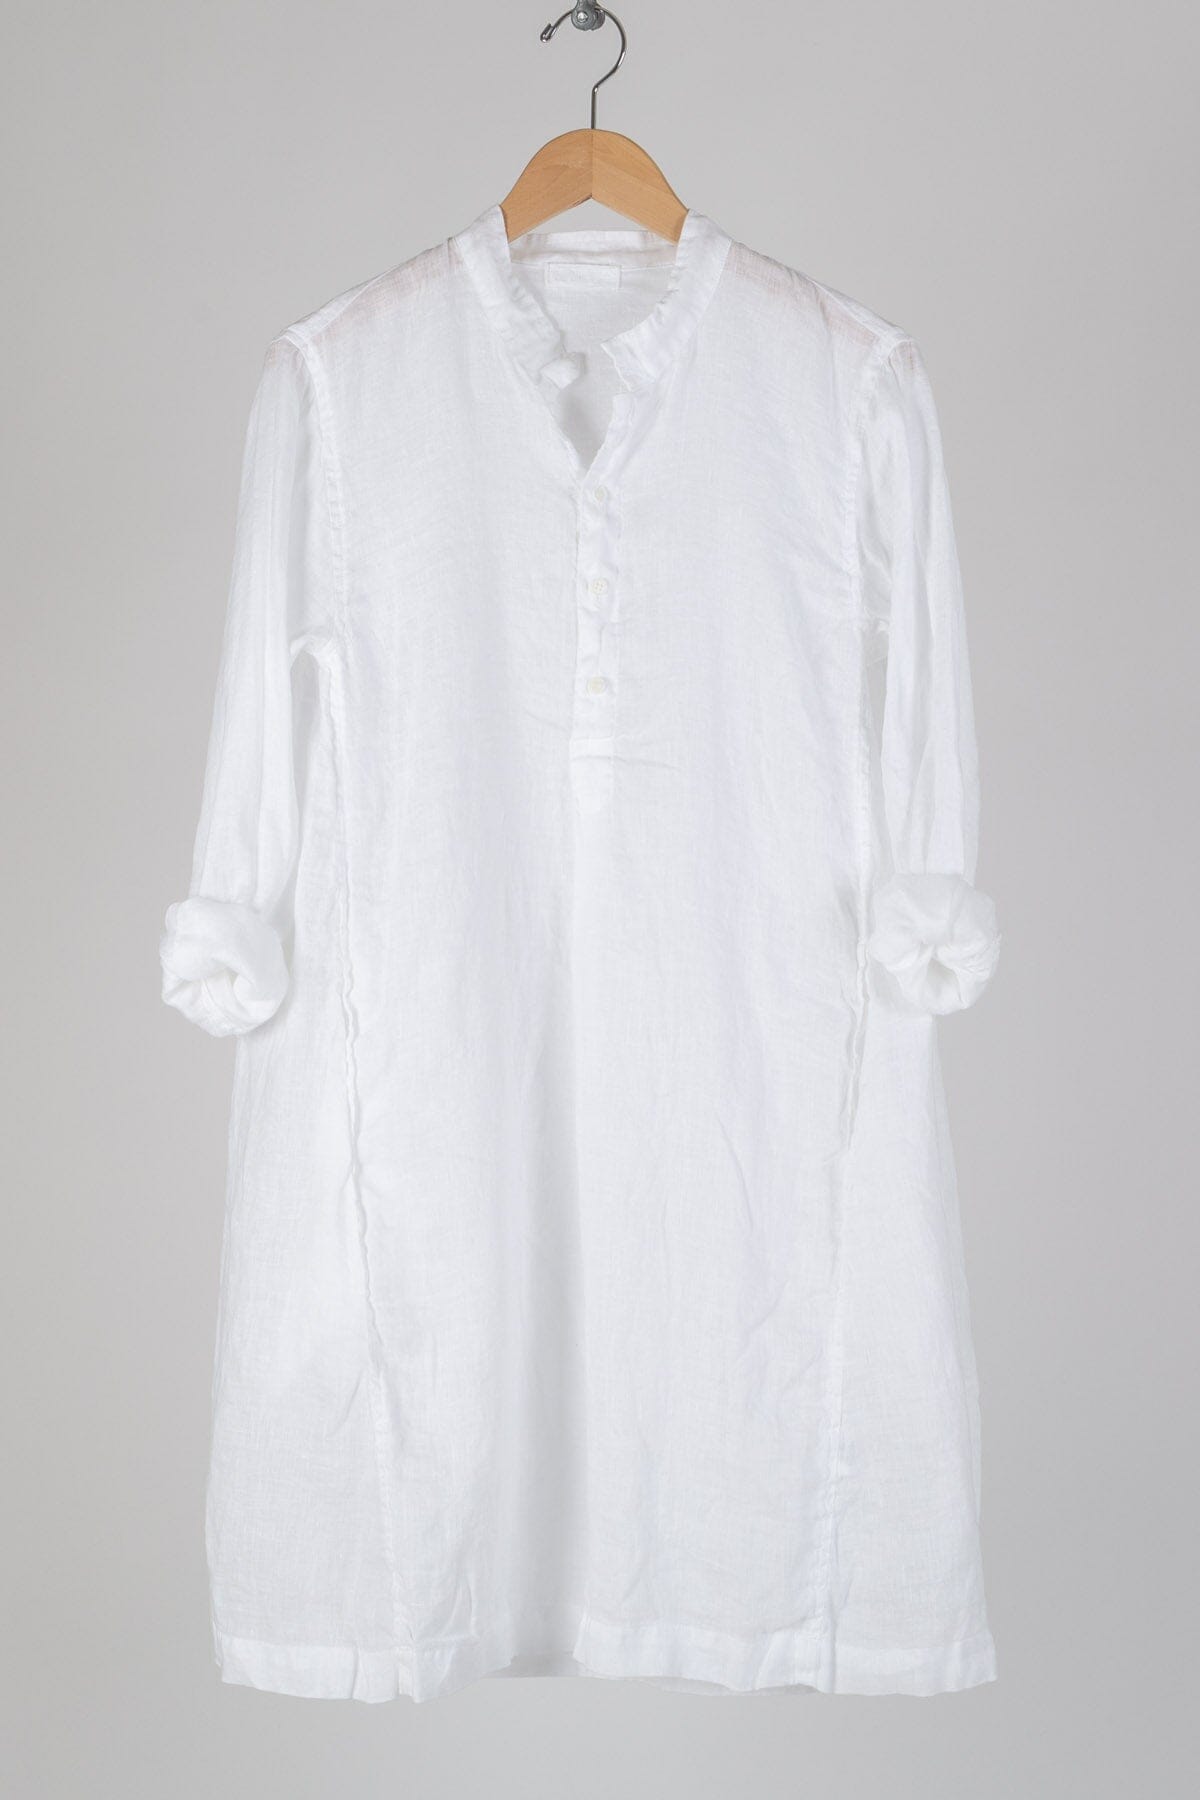 Jasmine - Linen S10 - Linen Shirt/Top/Tunic CP Shades white